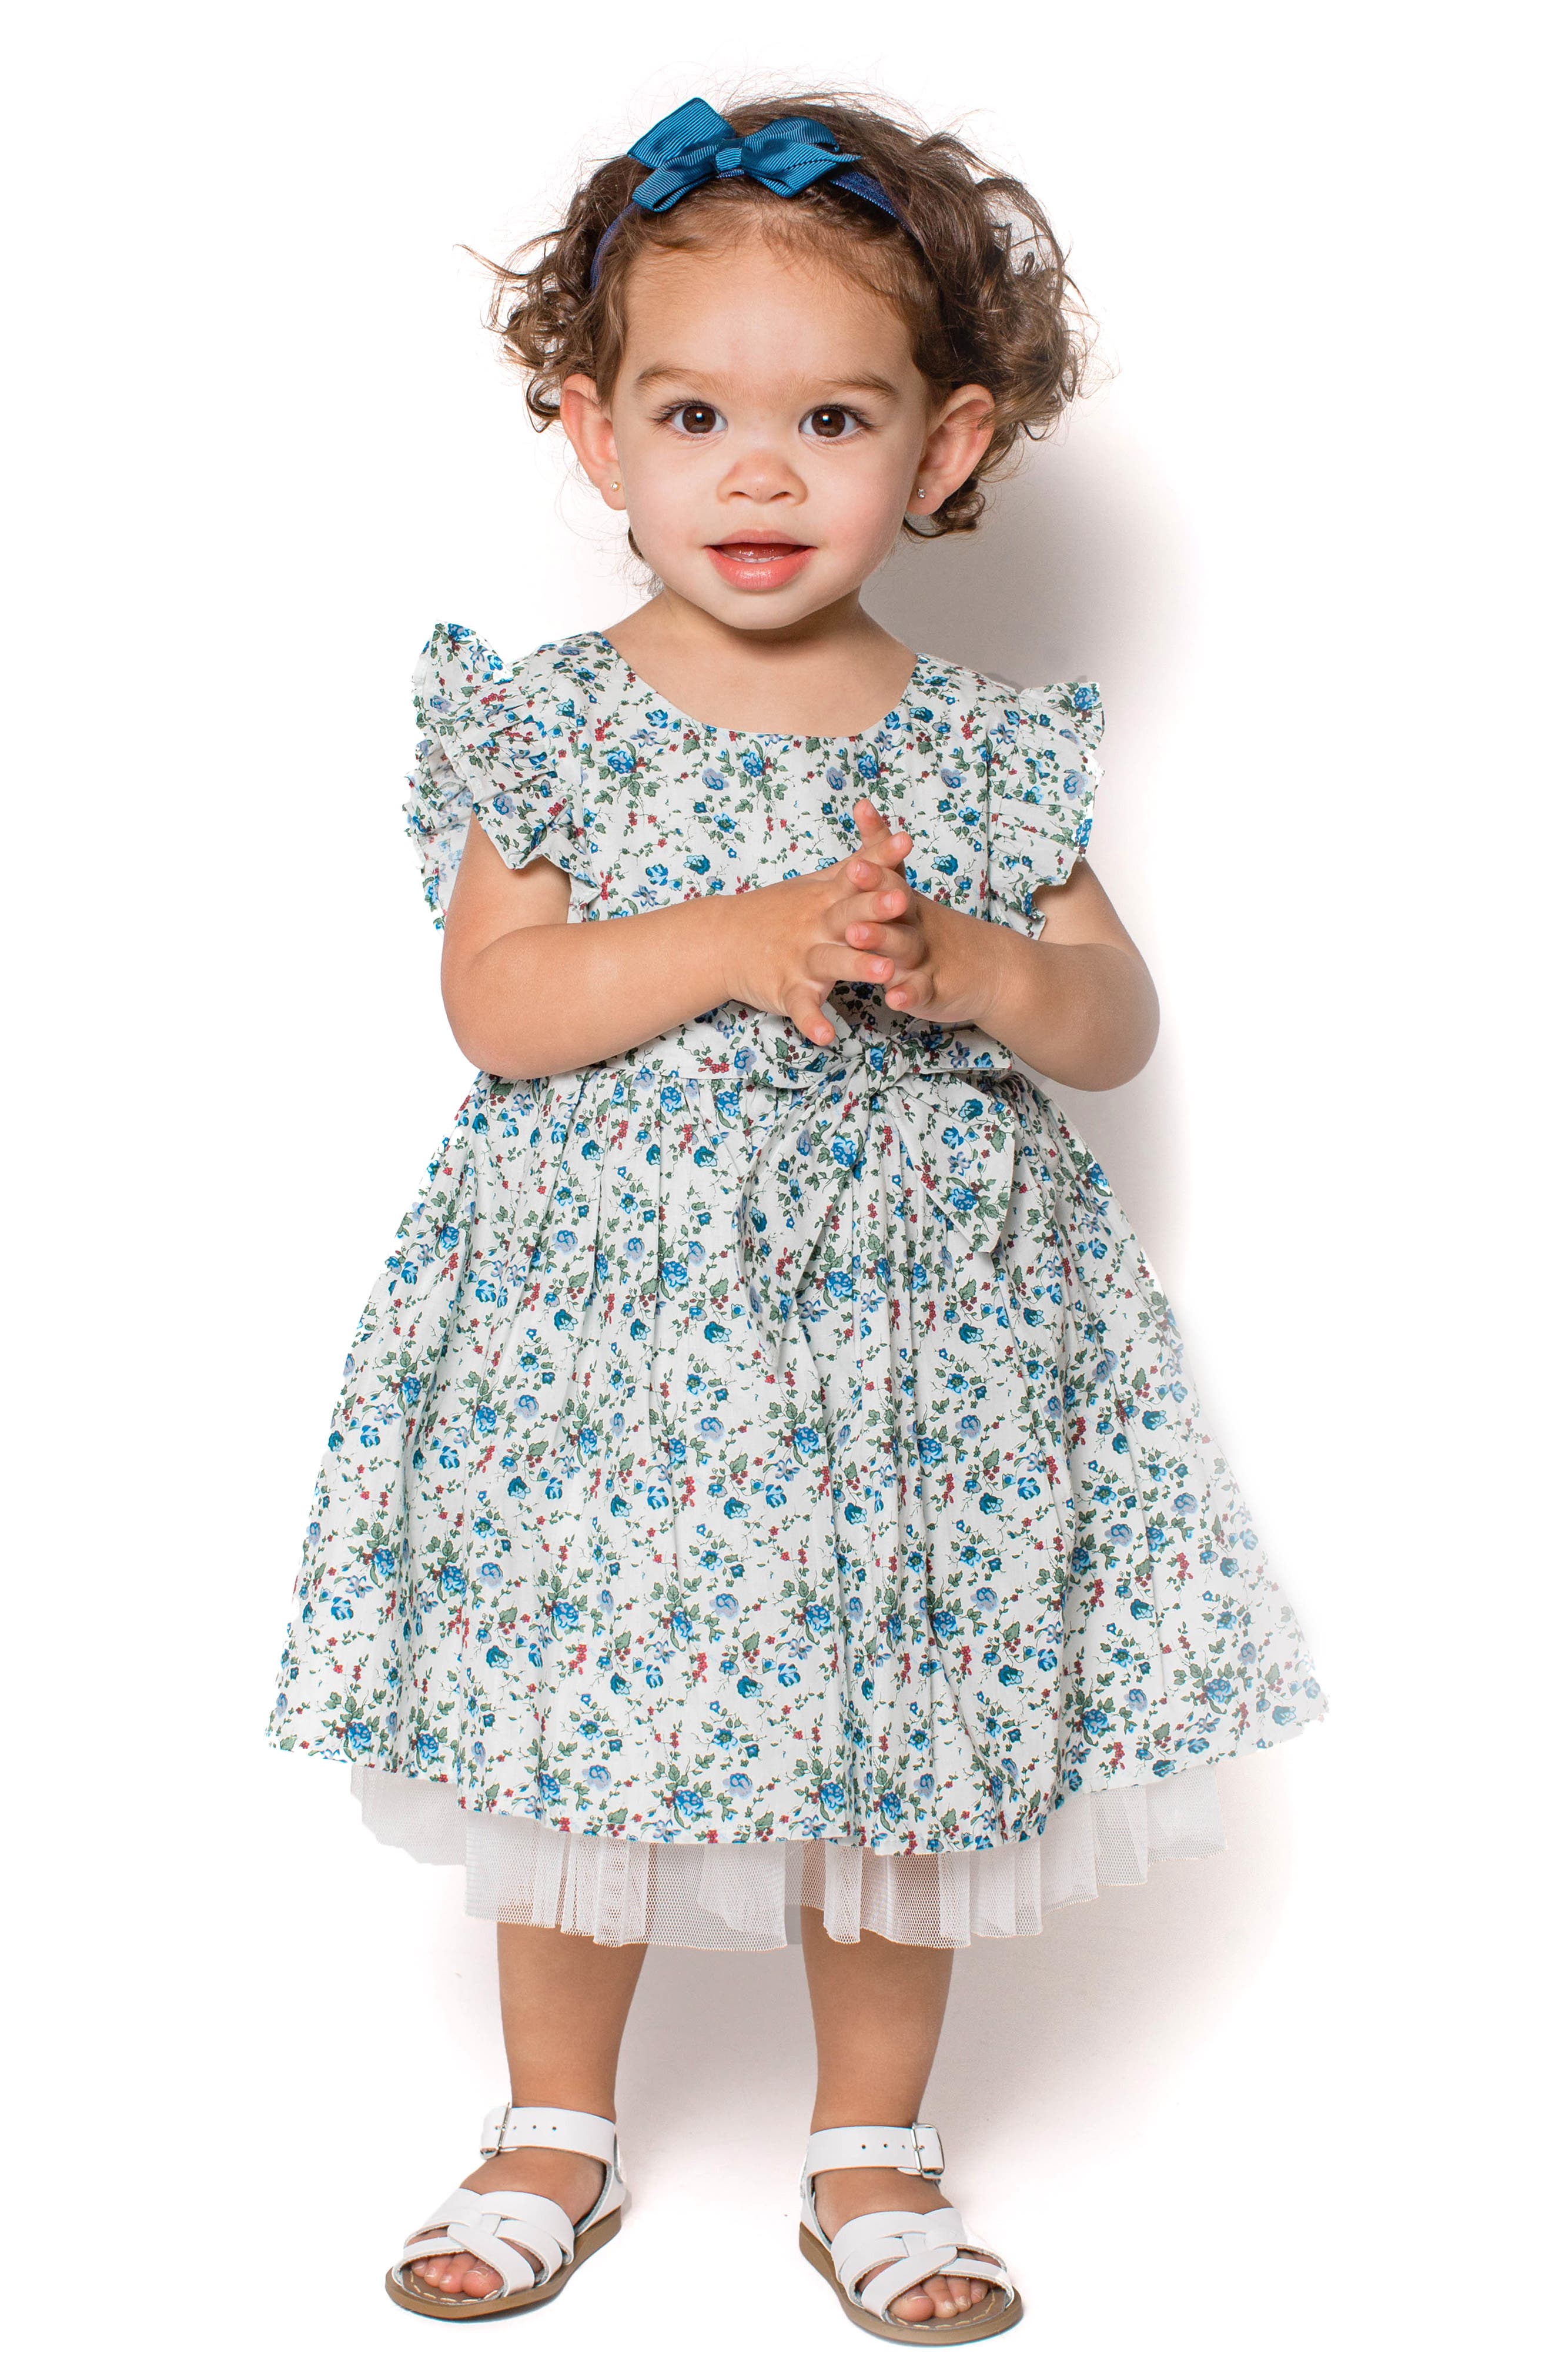 Carolui Toddler Newborn Baby Girls Dresses Cotton Summer Sleeveless Flowers Party Princess Clothing Sundress 